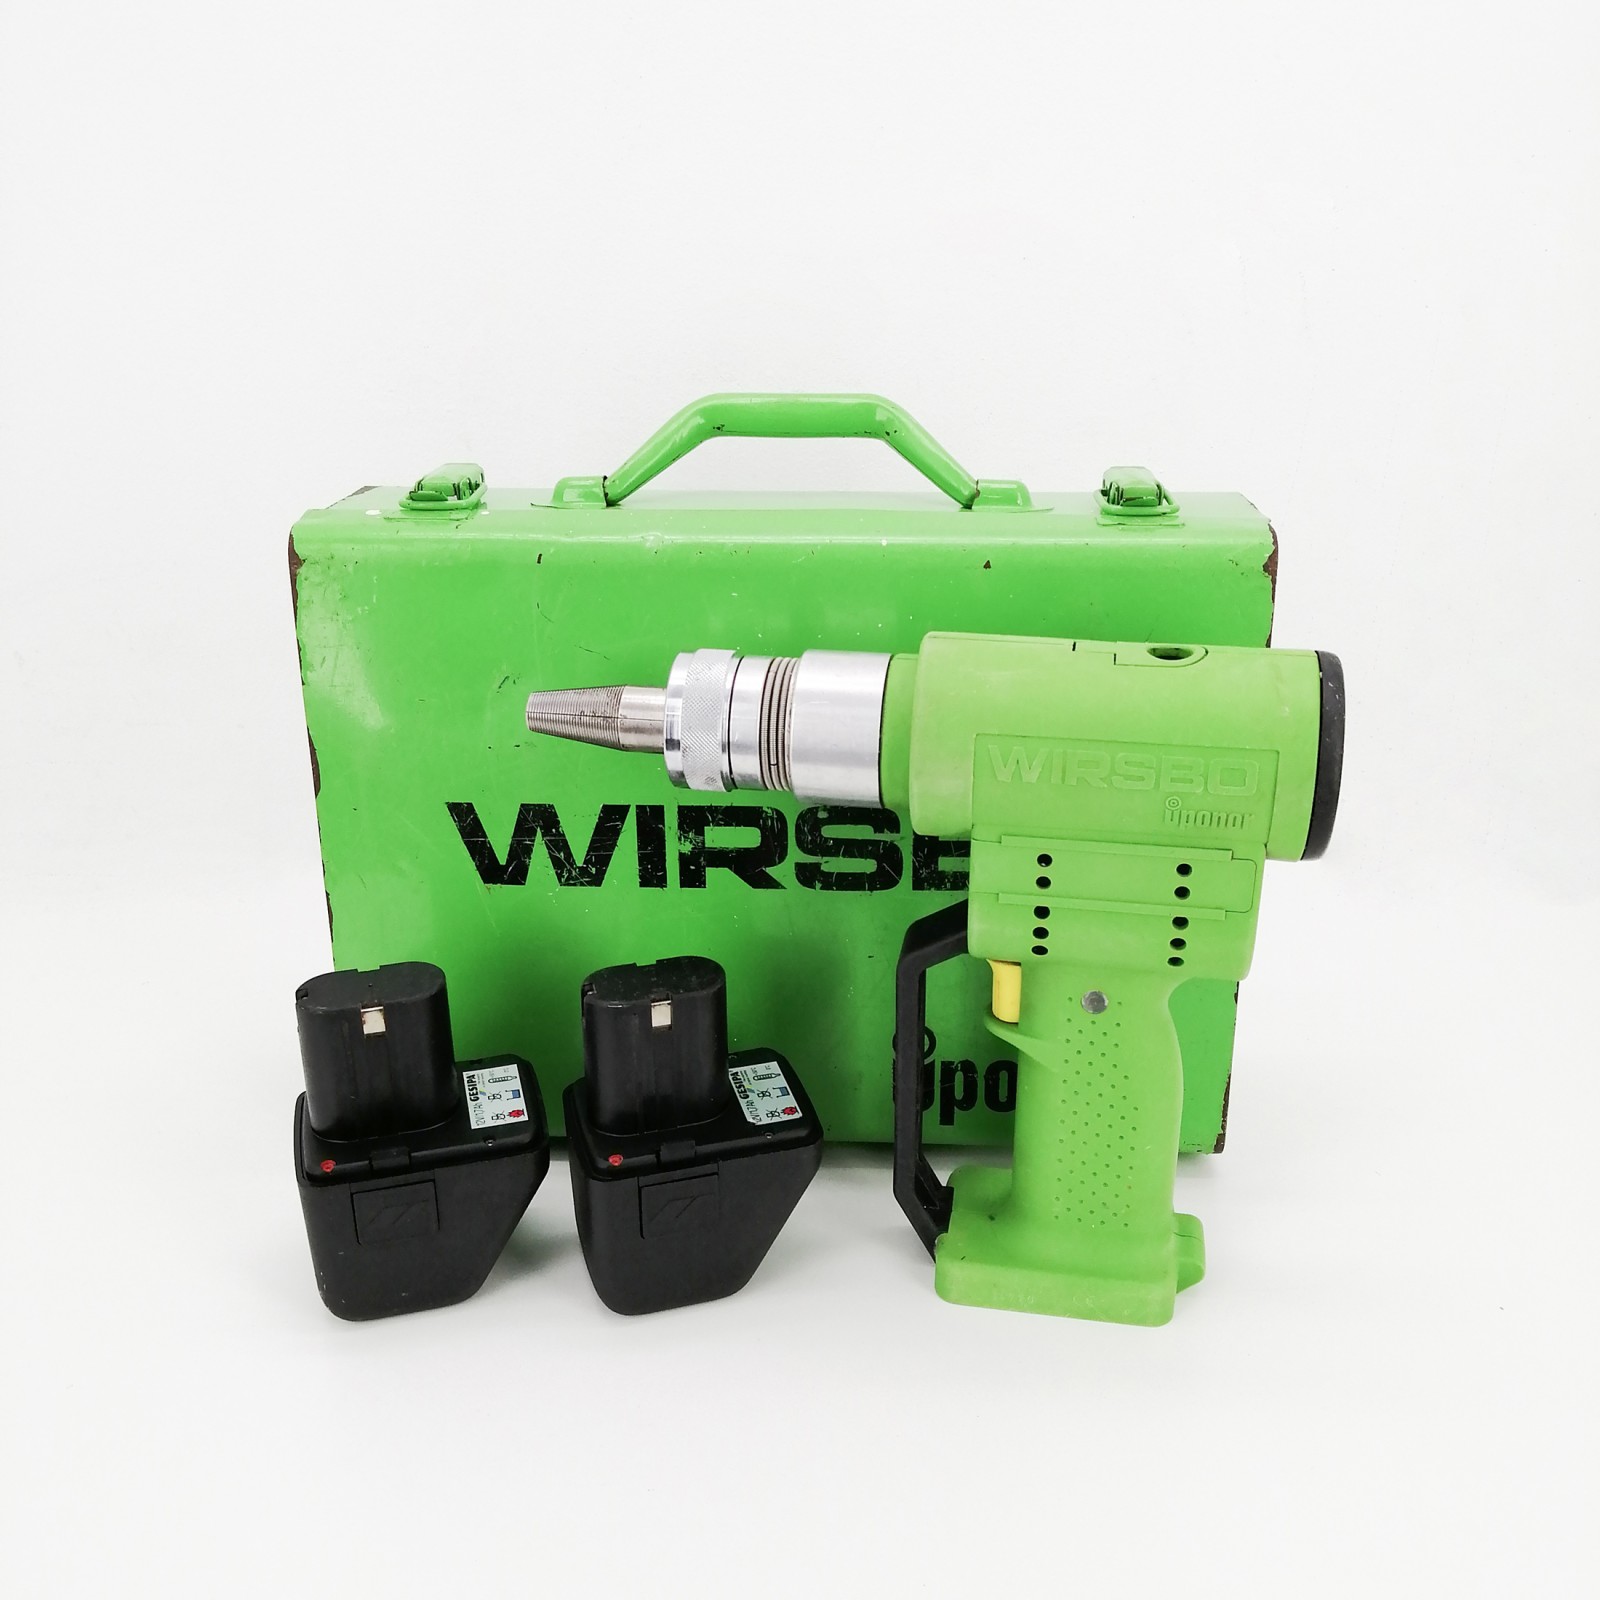 Expandidor Wirsbo Uponor con 2 baterías 12V de segunda mano